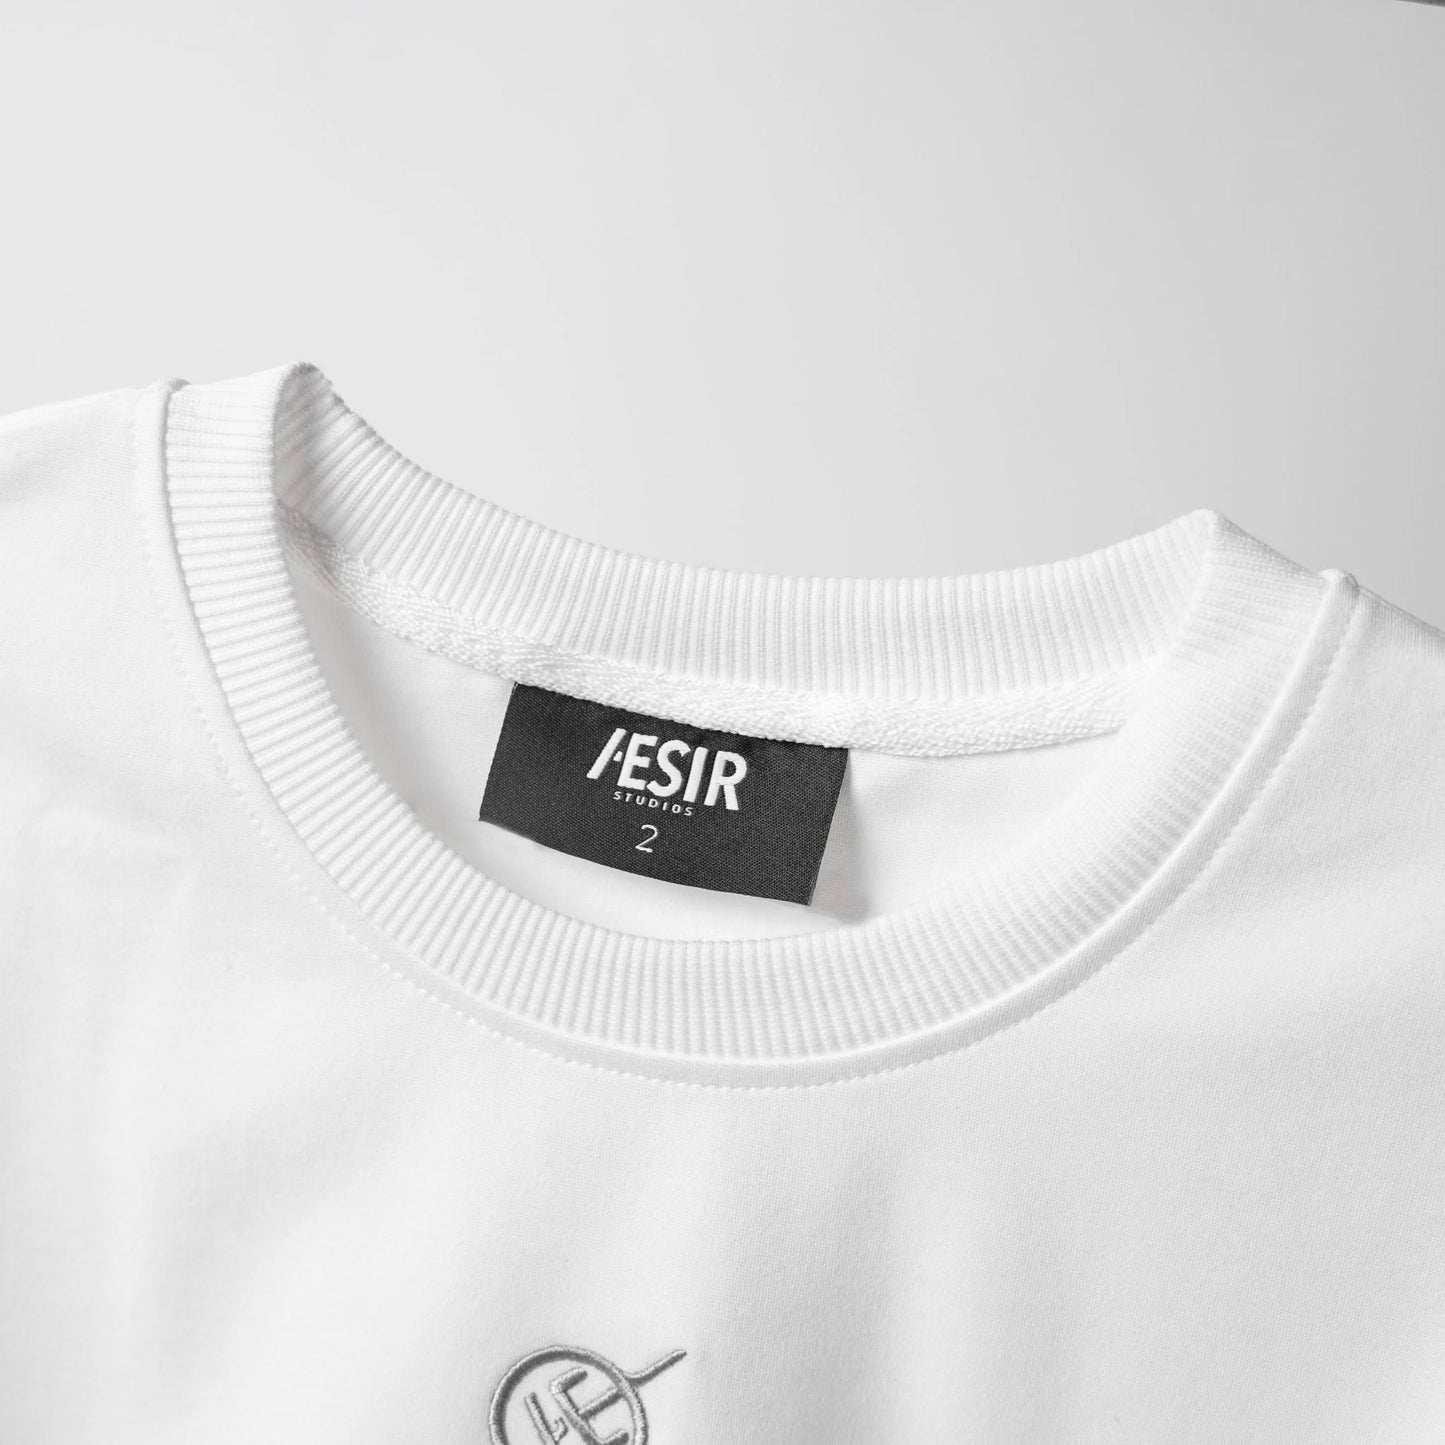 ryan-logo-tshirt-AESIR